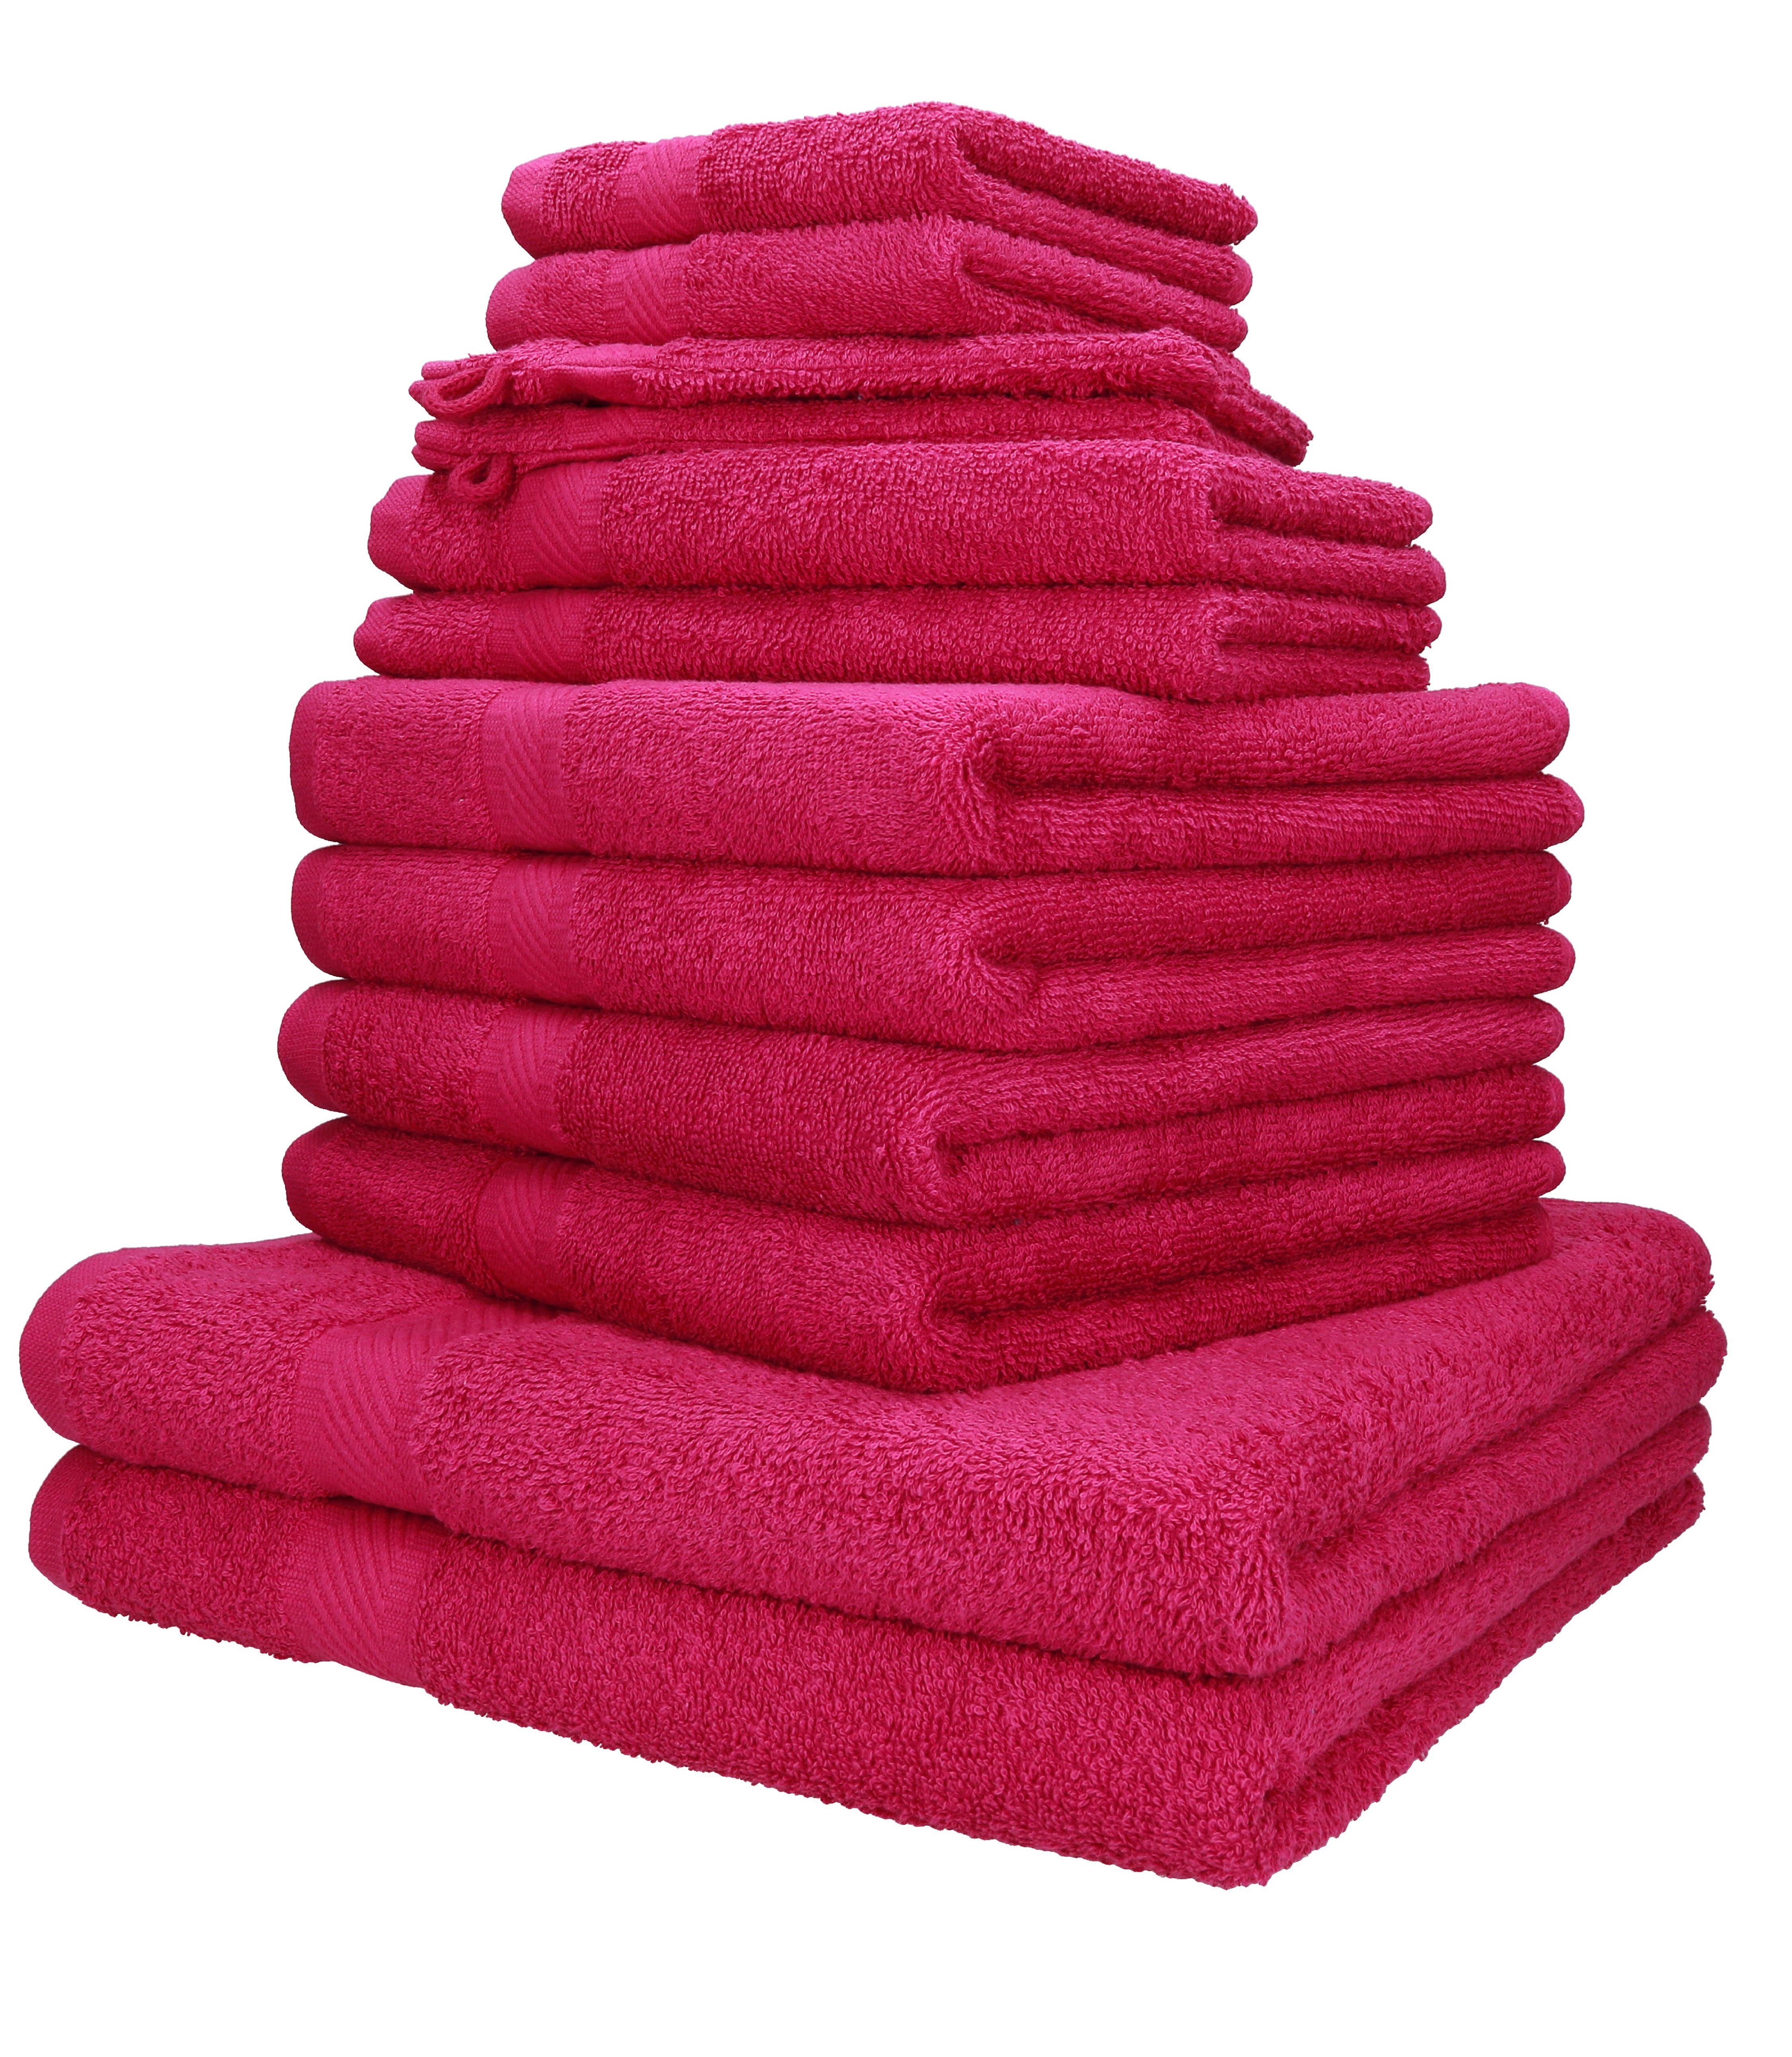 Betz Handtuch Set 12-TLG. Handtuch-Set Palermo 100% Baumwolle 2 Liegetücher 4 Handtücher 2 Gästetücher 2 Seiftücher 2 Waschhandschuhe, 100% Baumwolle, (12-tlg) cranberry